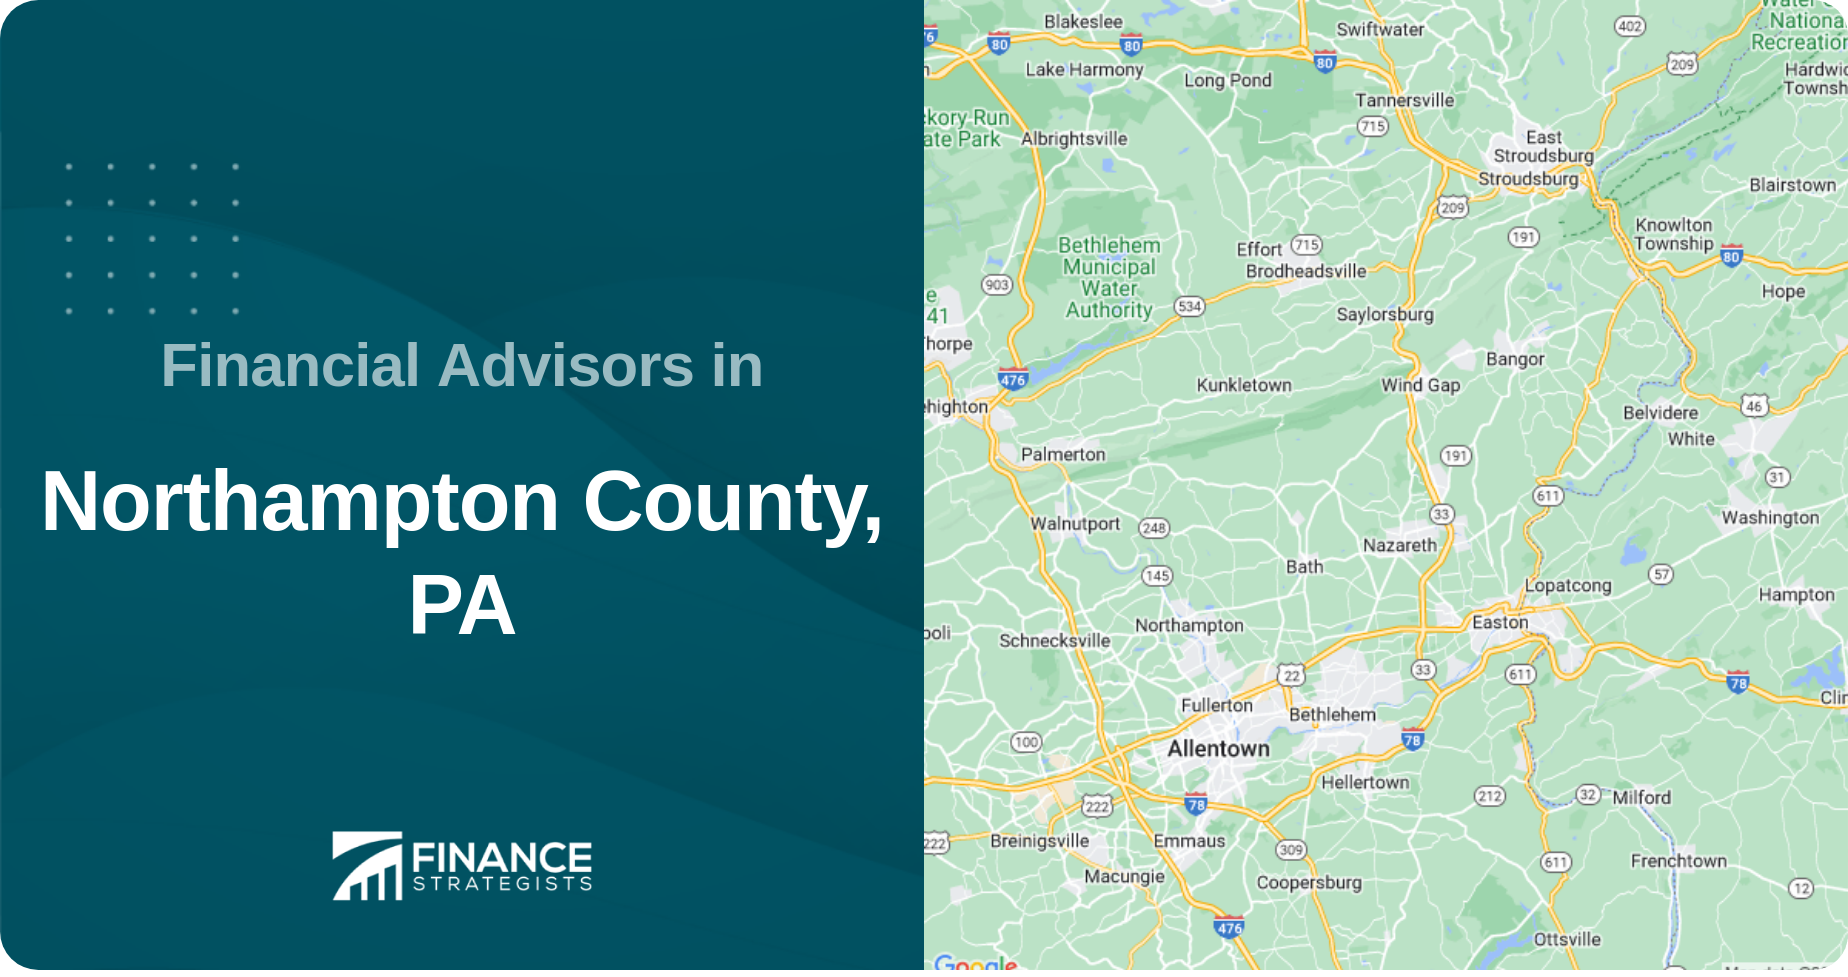 Financial Advisors in Northampton County, PA